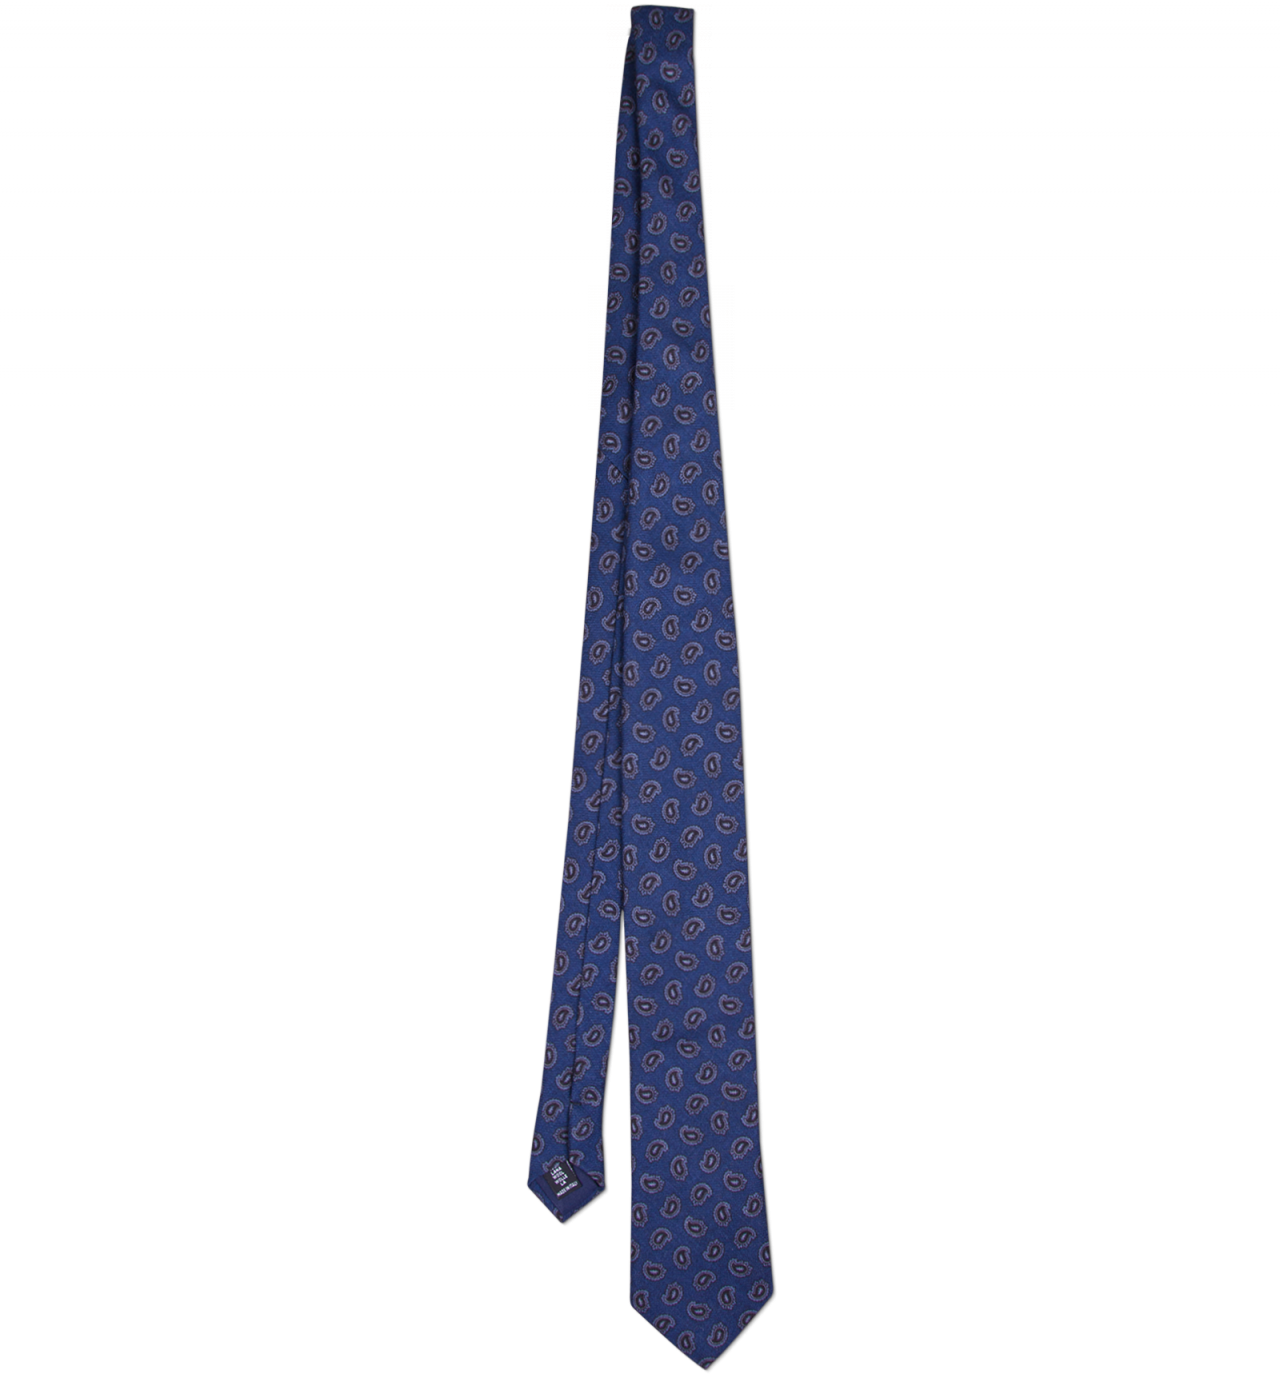 Purple Necktie Pattern - Tie PNG image png download - 1280*1374 - Free ...